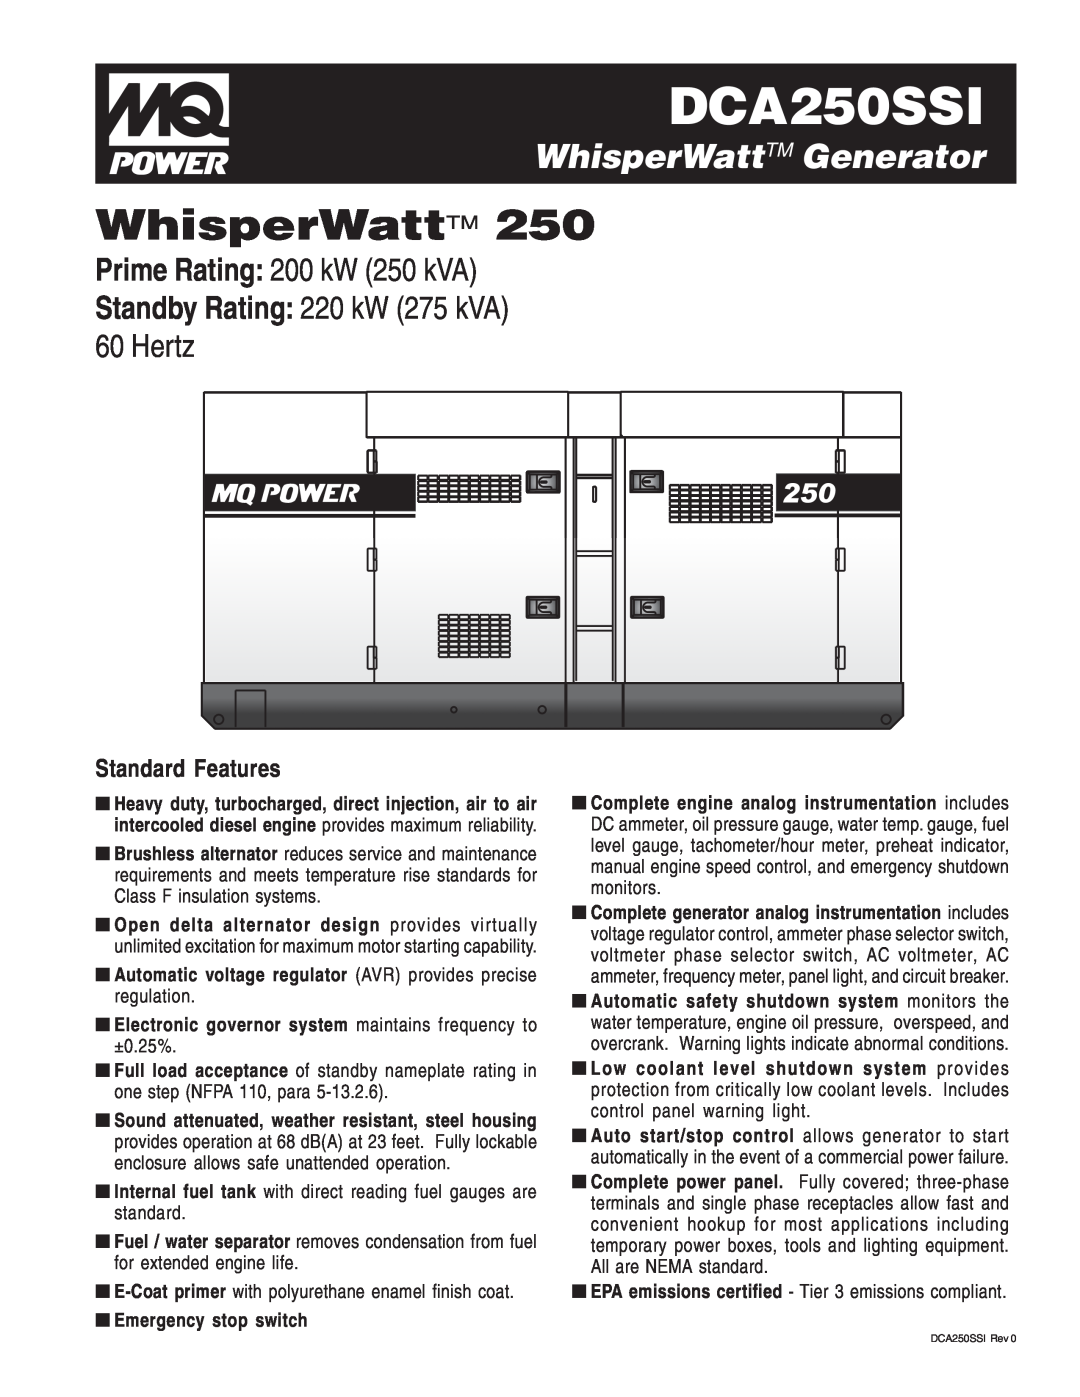 Multiquip DCA250SSI manual WhisperWattTM Generator, Standard Features, Prime Rating 200 kW 250 kVA, Hertz 